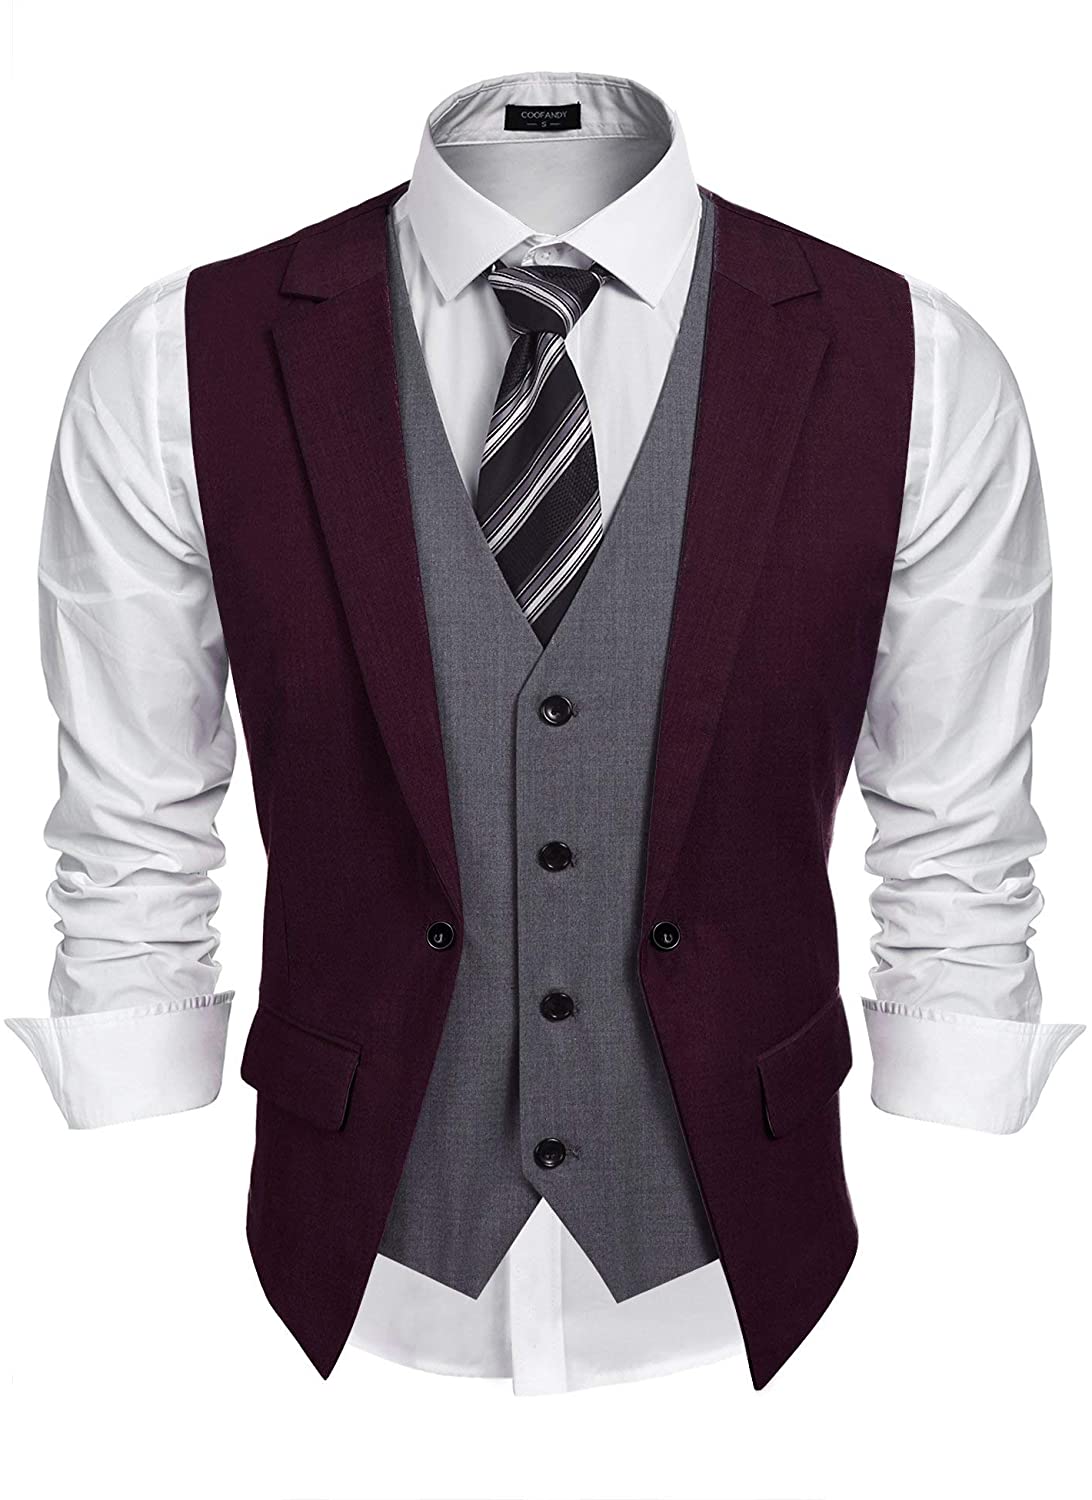 COOFANDY Men's Formal Fashion Vest Layered Waistcoat Business Dress Suit  Vests f